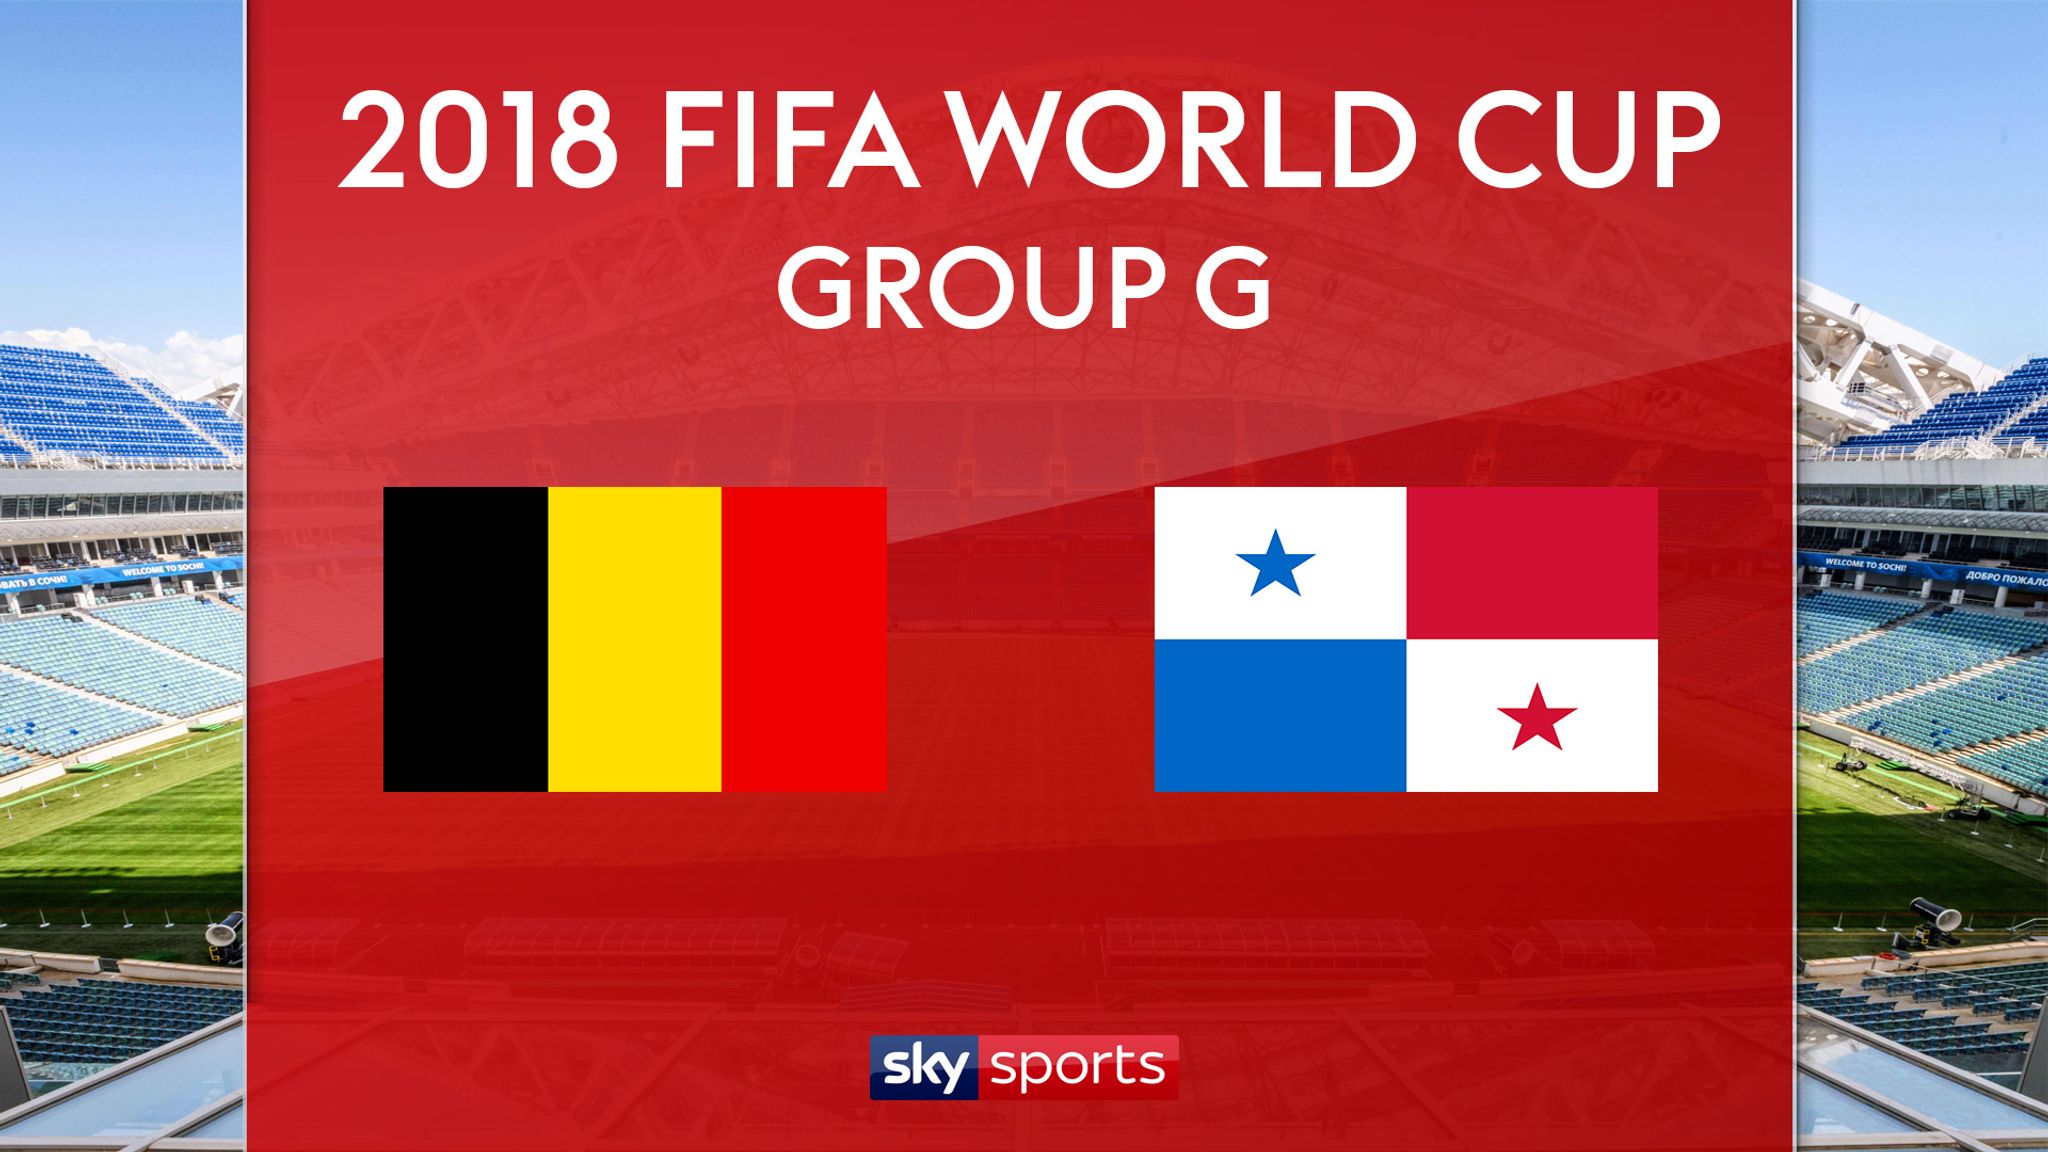 FIFA World Cup 2018 Group G: Belgium